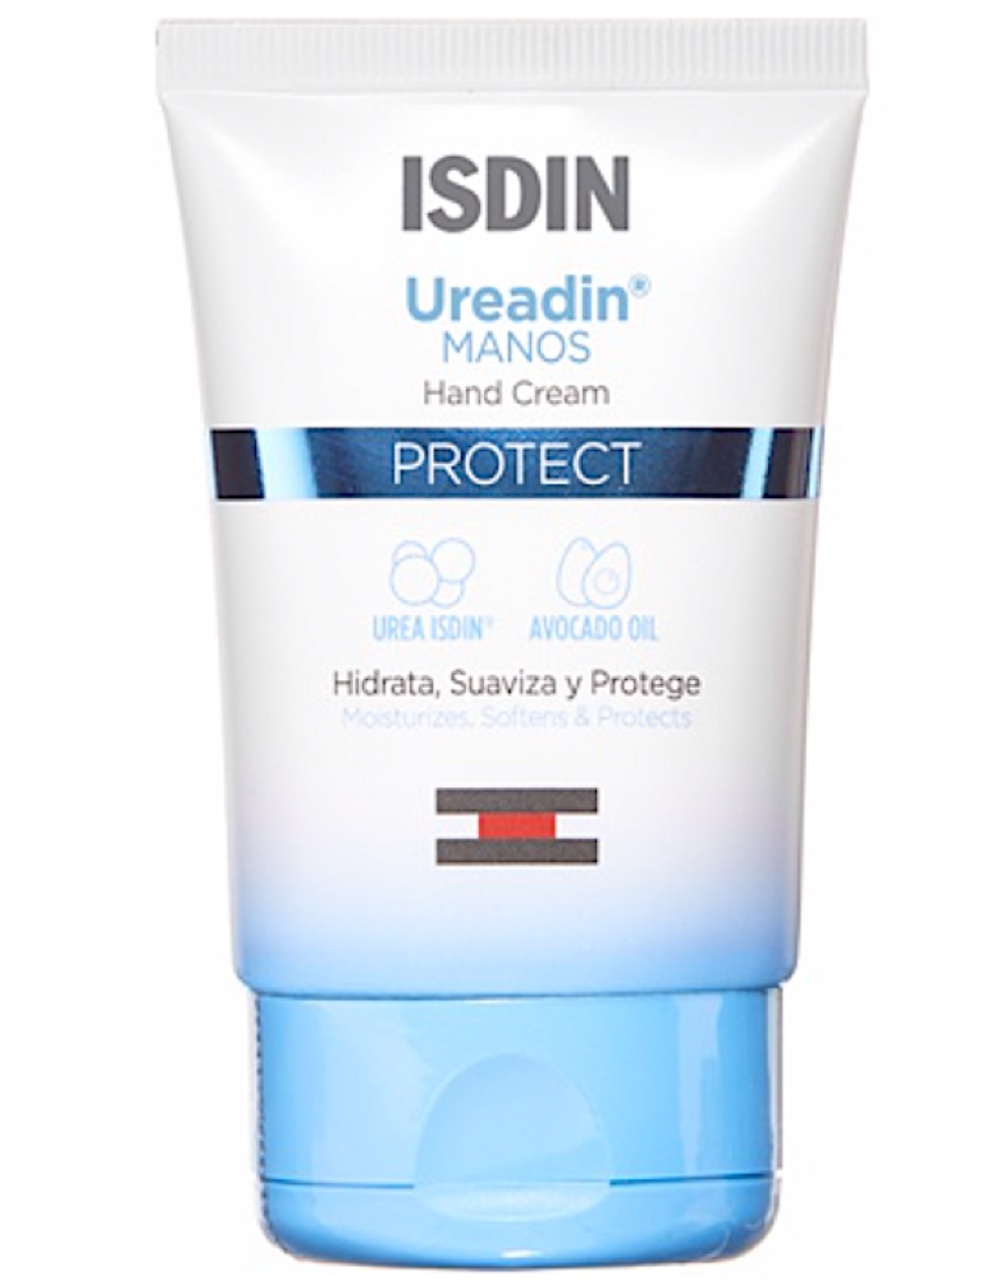 ISDIN Ureadin Manos Hand Cream Protect